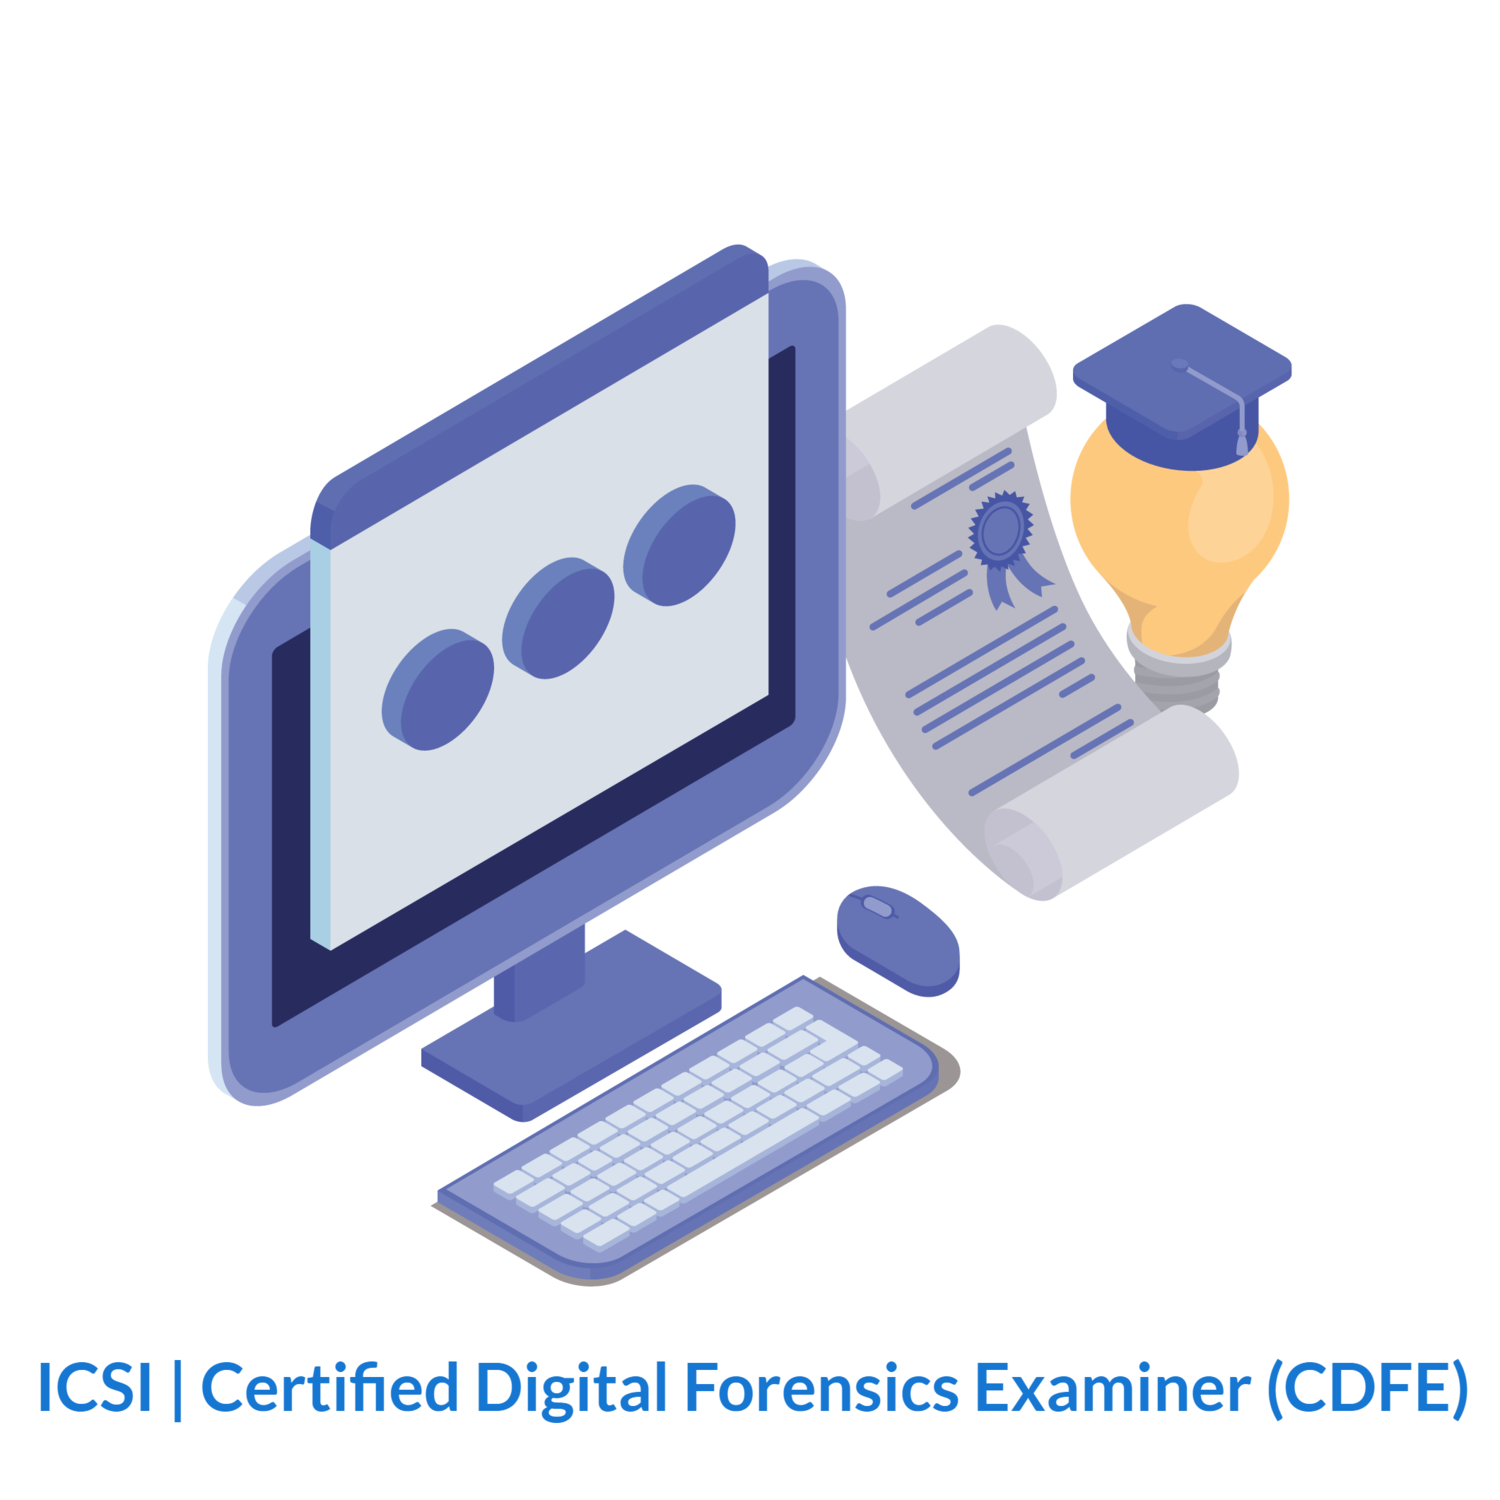 ICSI | Certified Digital Forensics Examiner (CDFE)